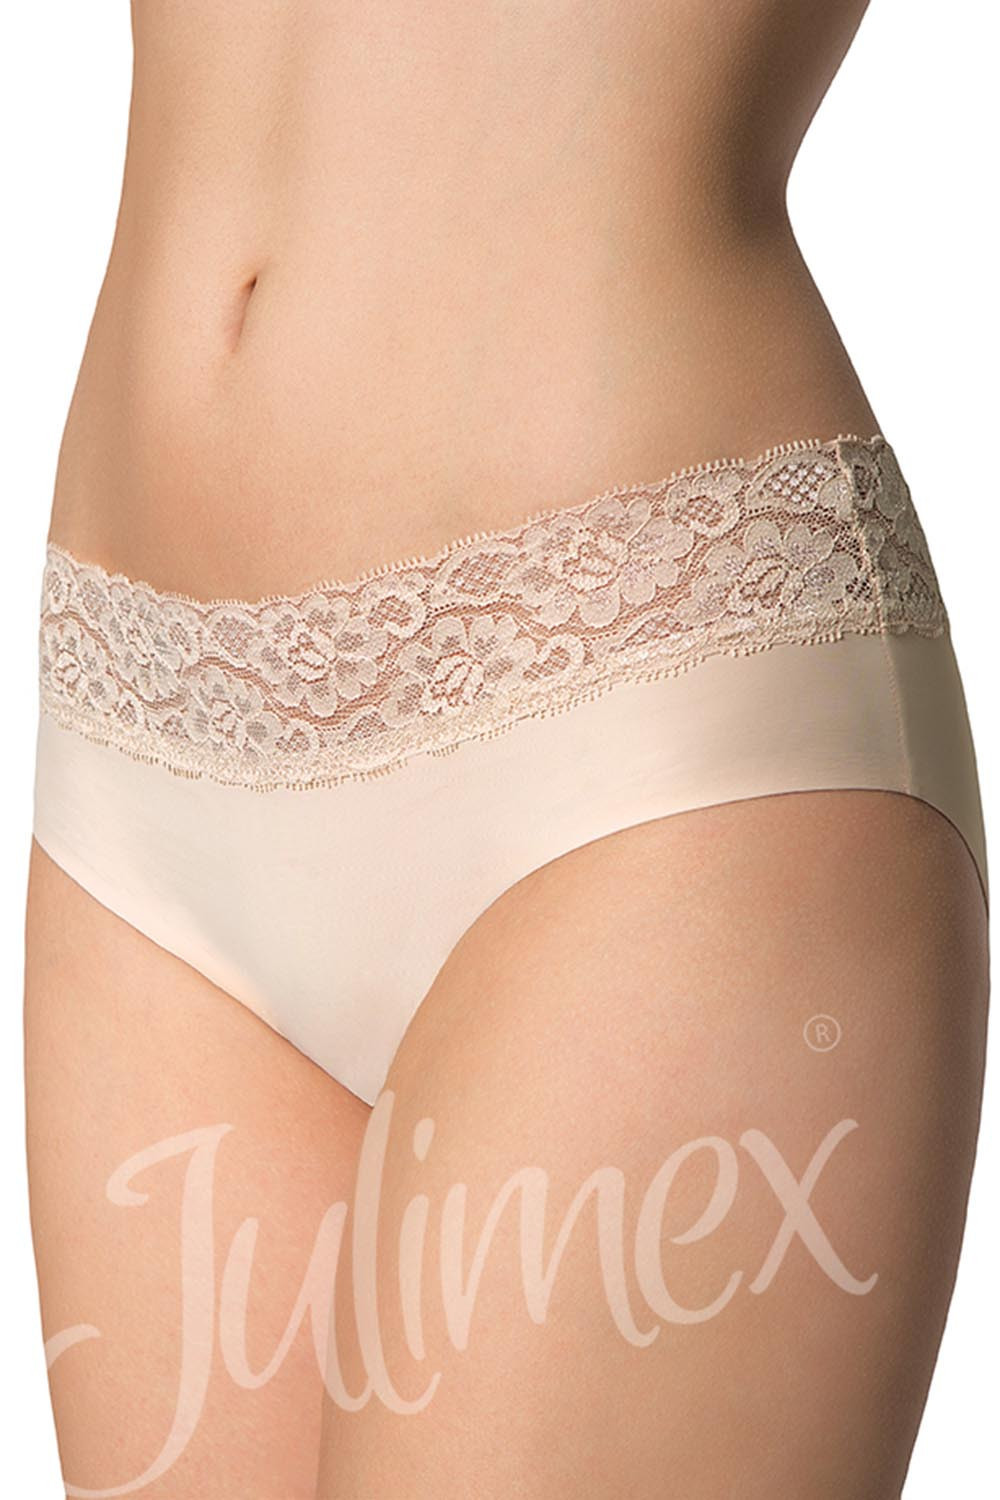 Kalhotky model 108380 Julimex Lingerie Xl